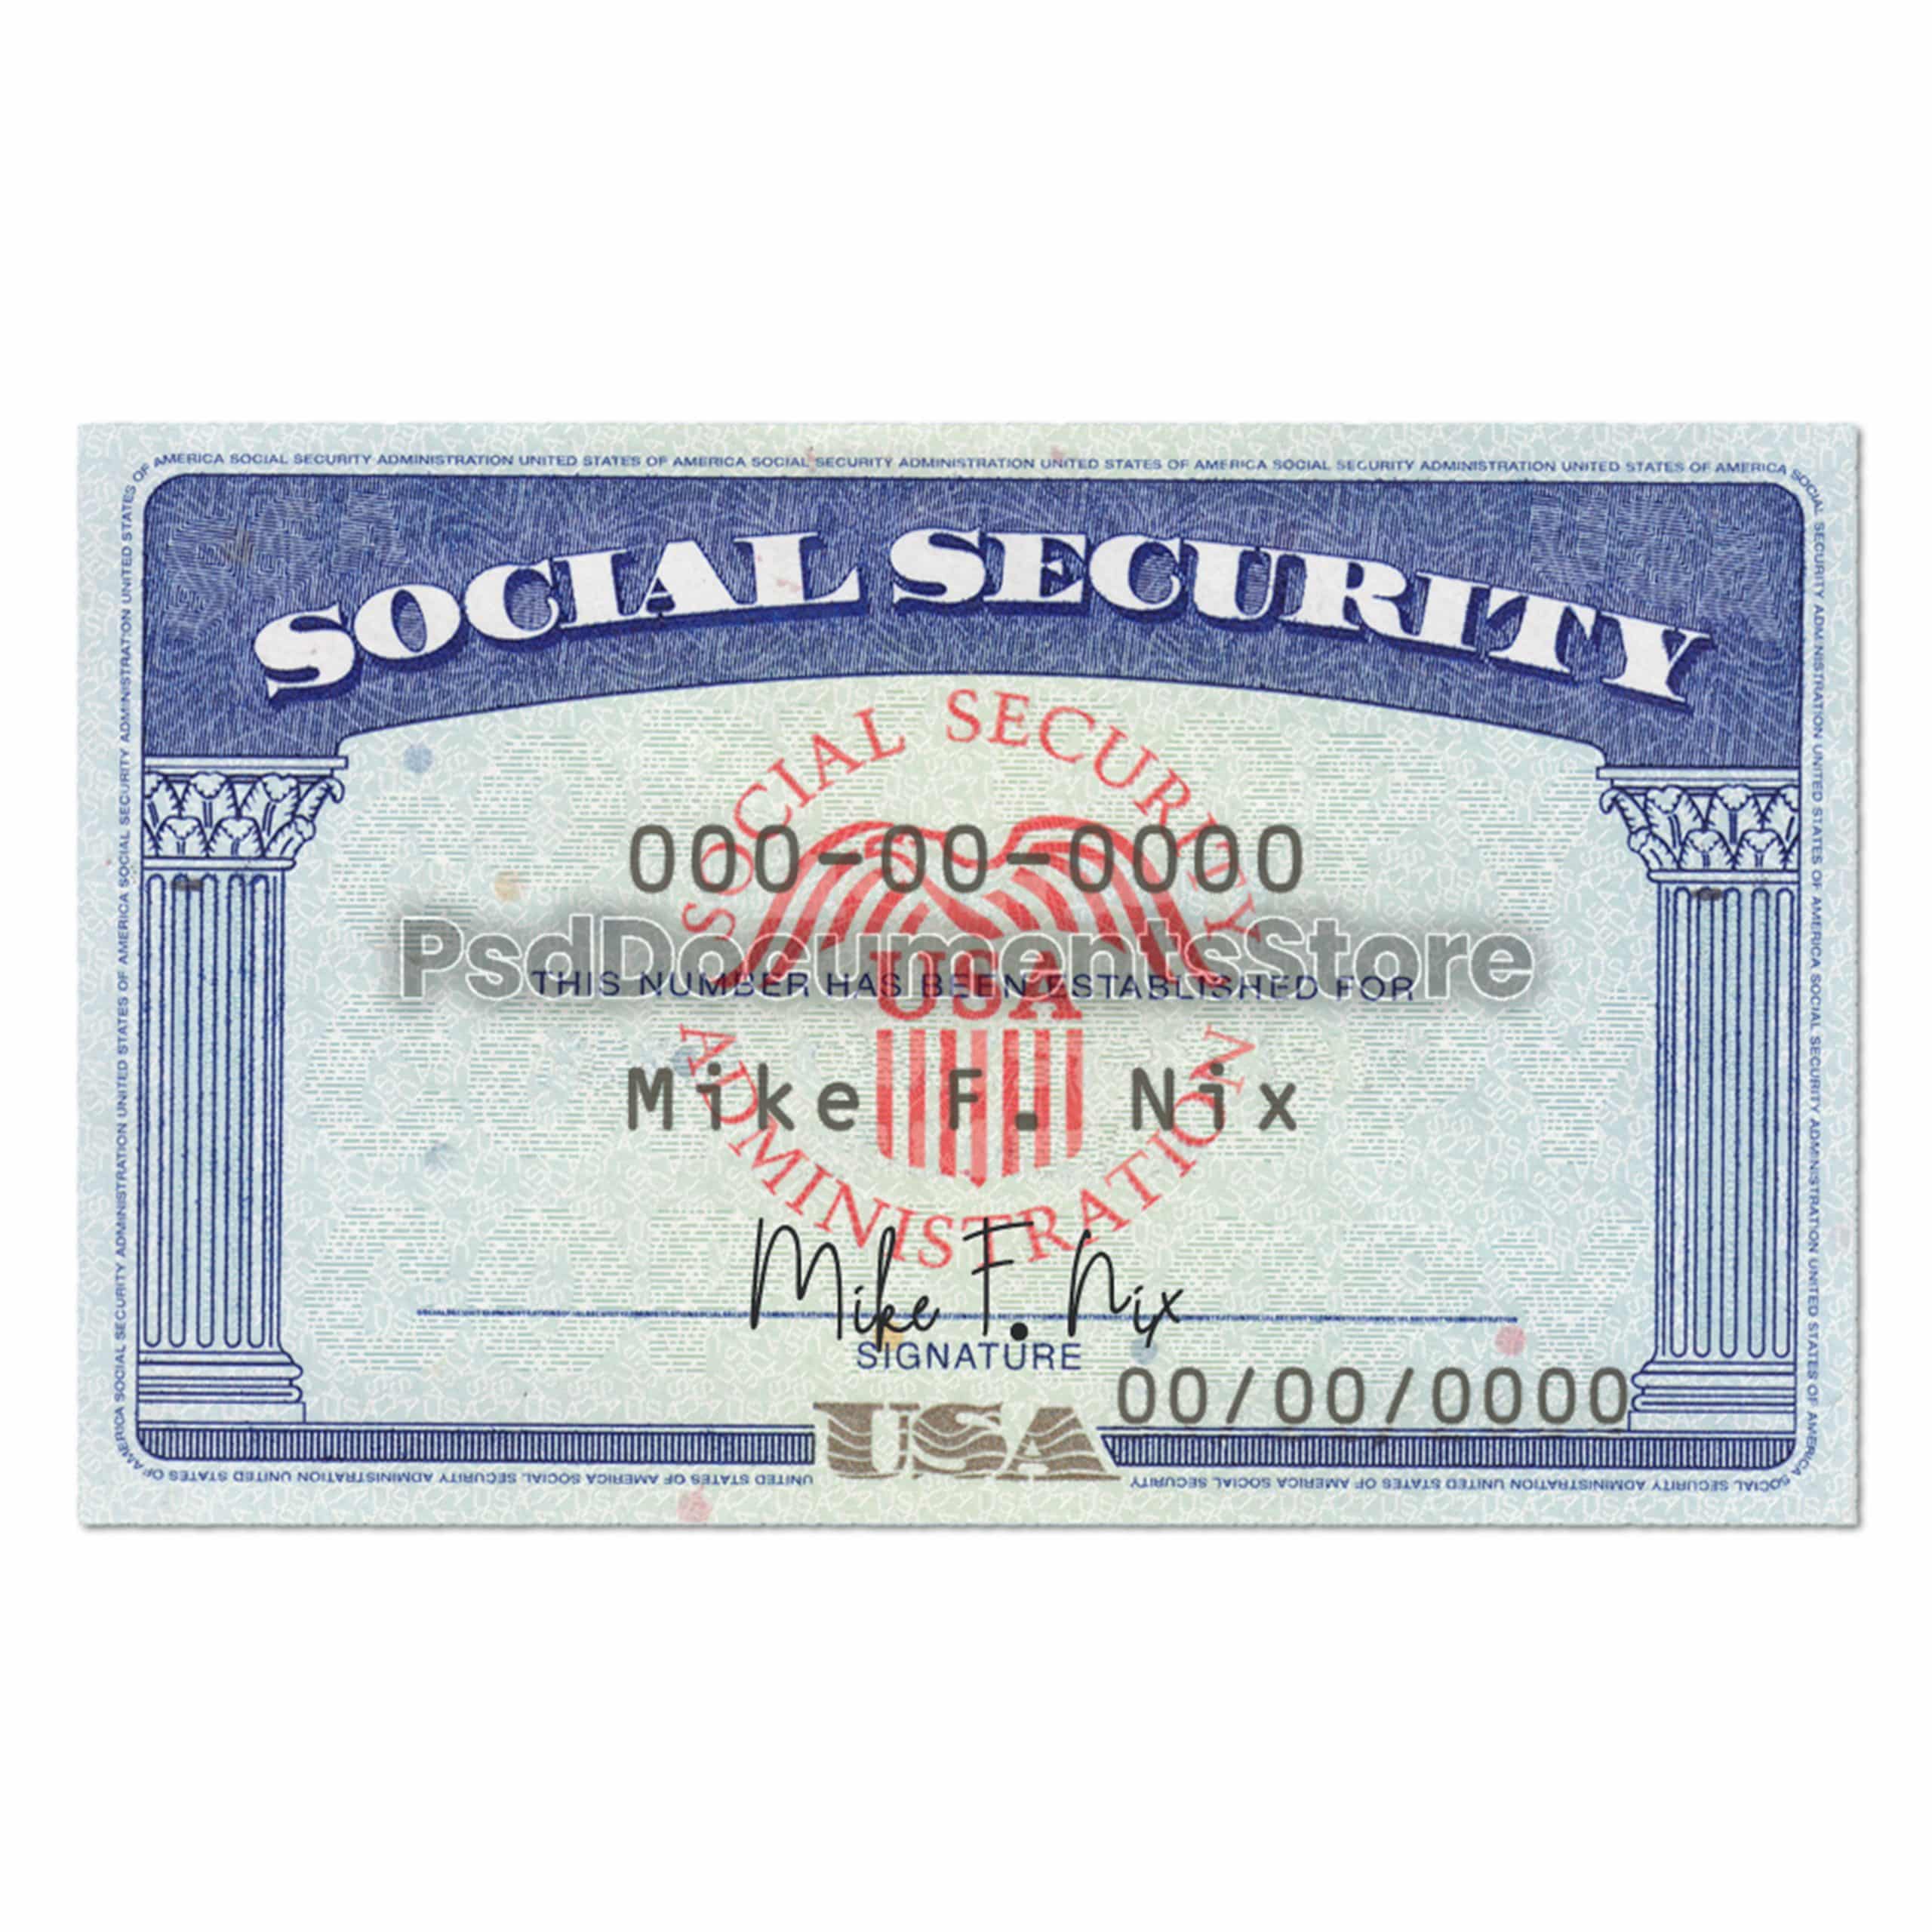 Social Security Card Template